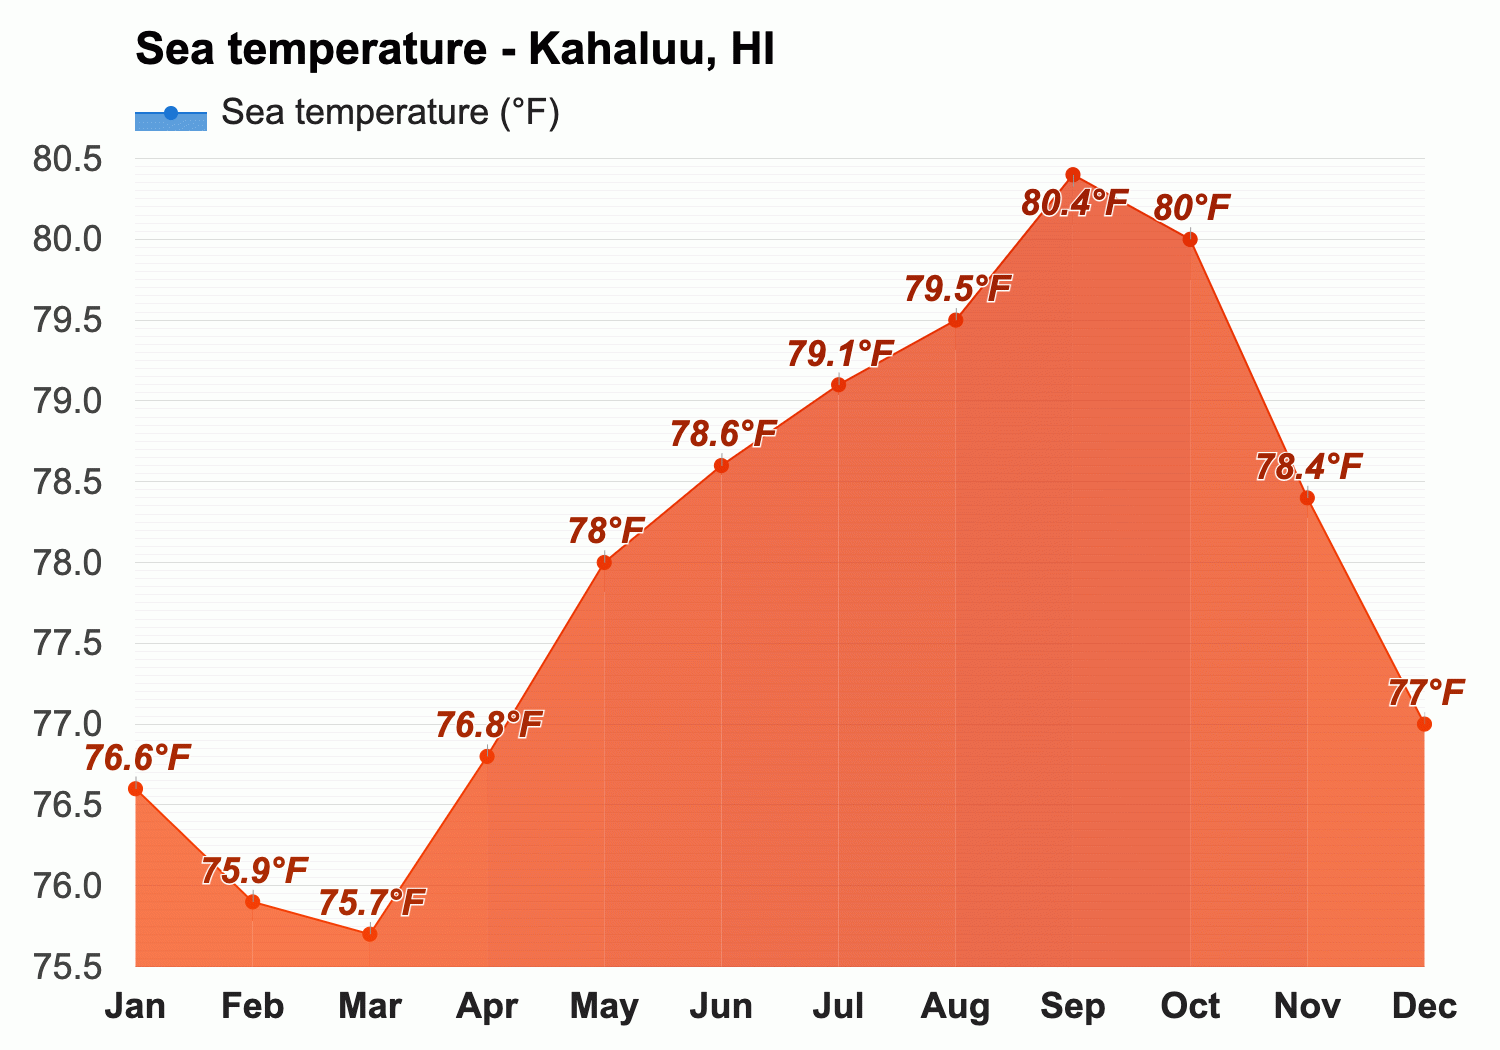 Kahaluu, HI - February weather forecast and climate information 